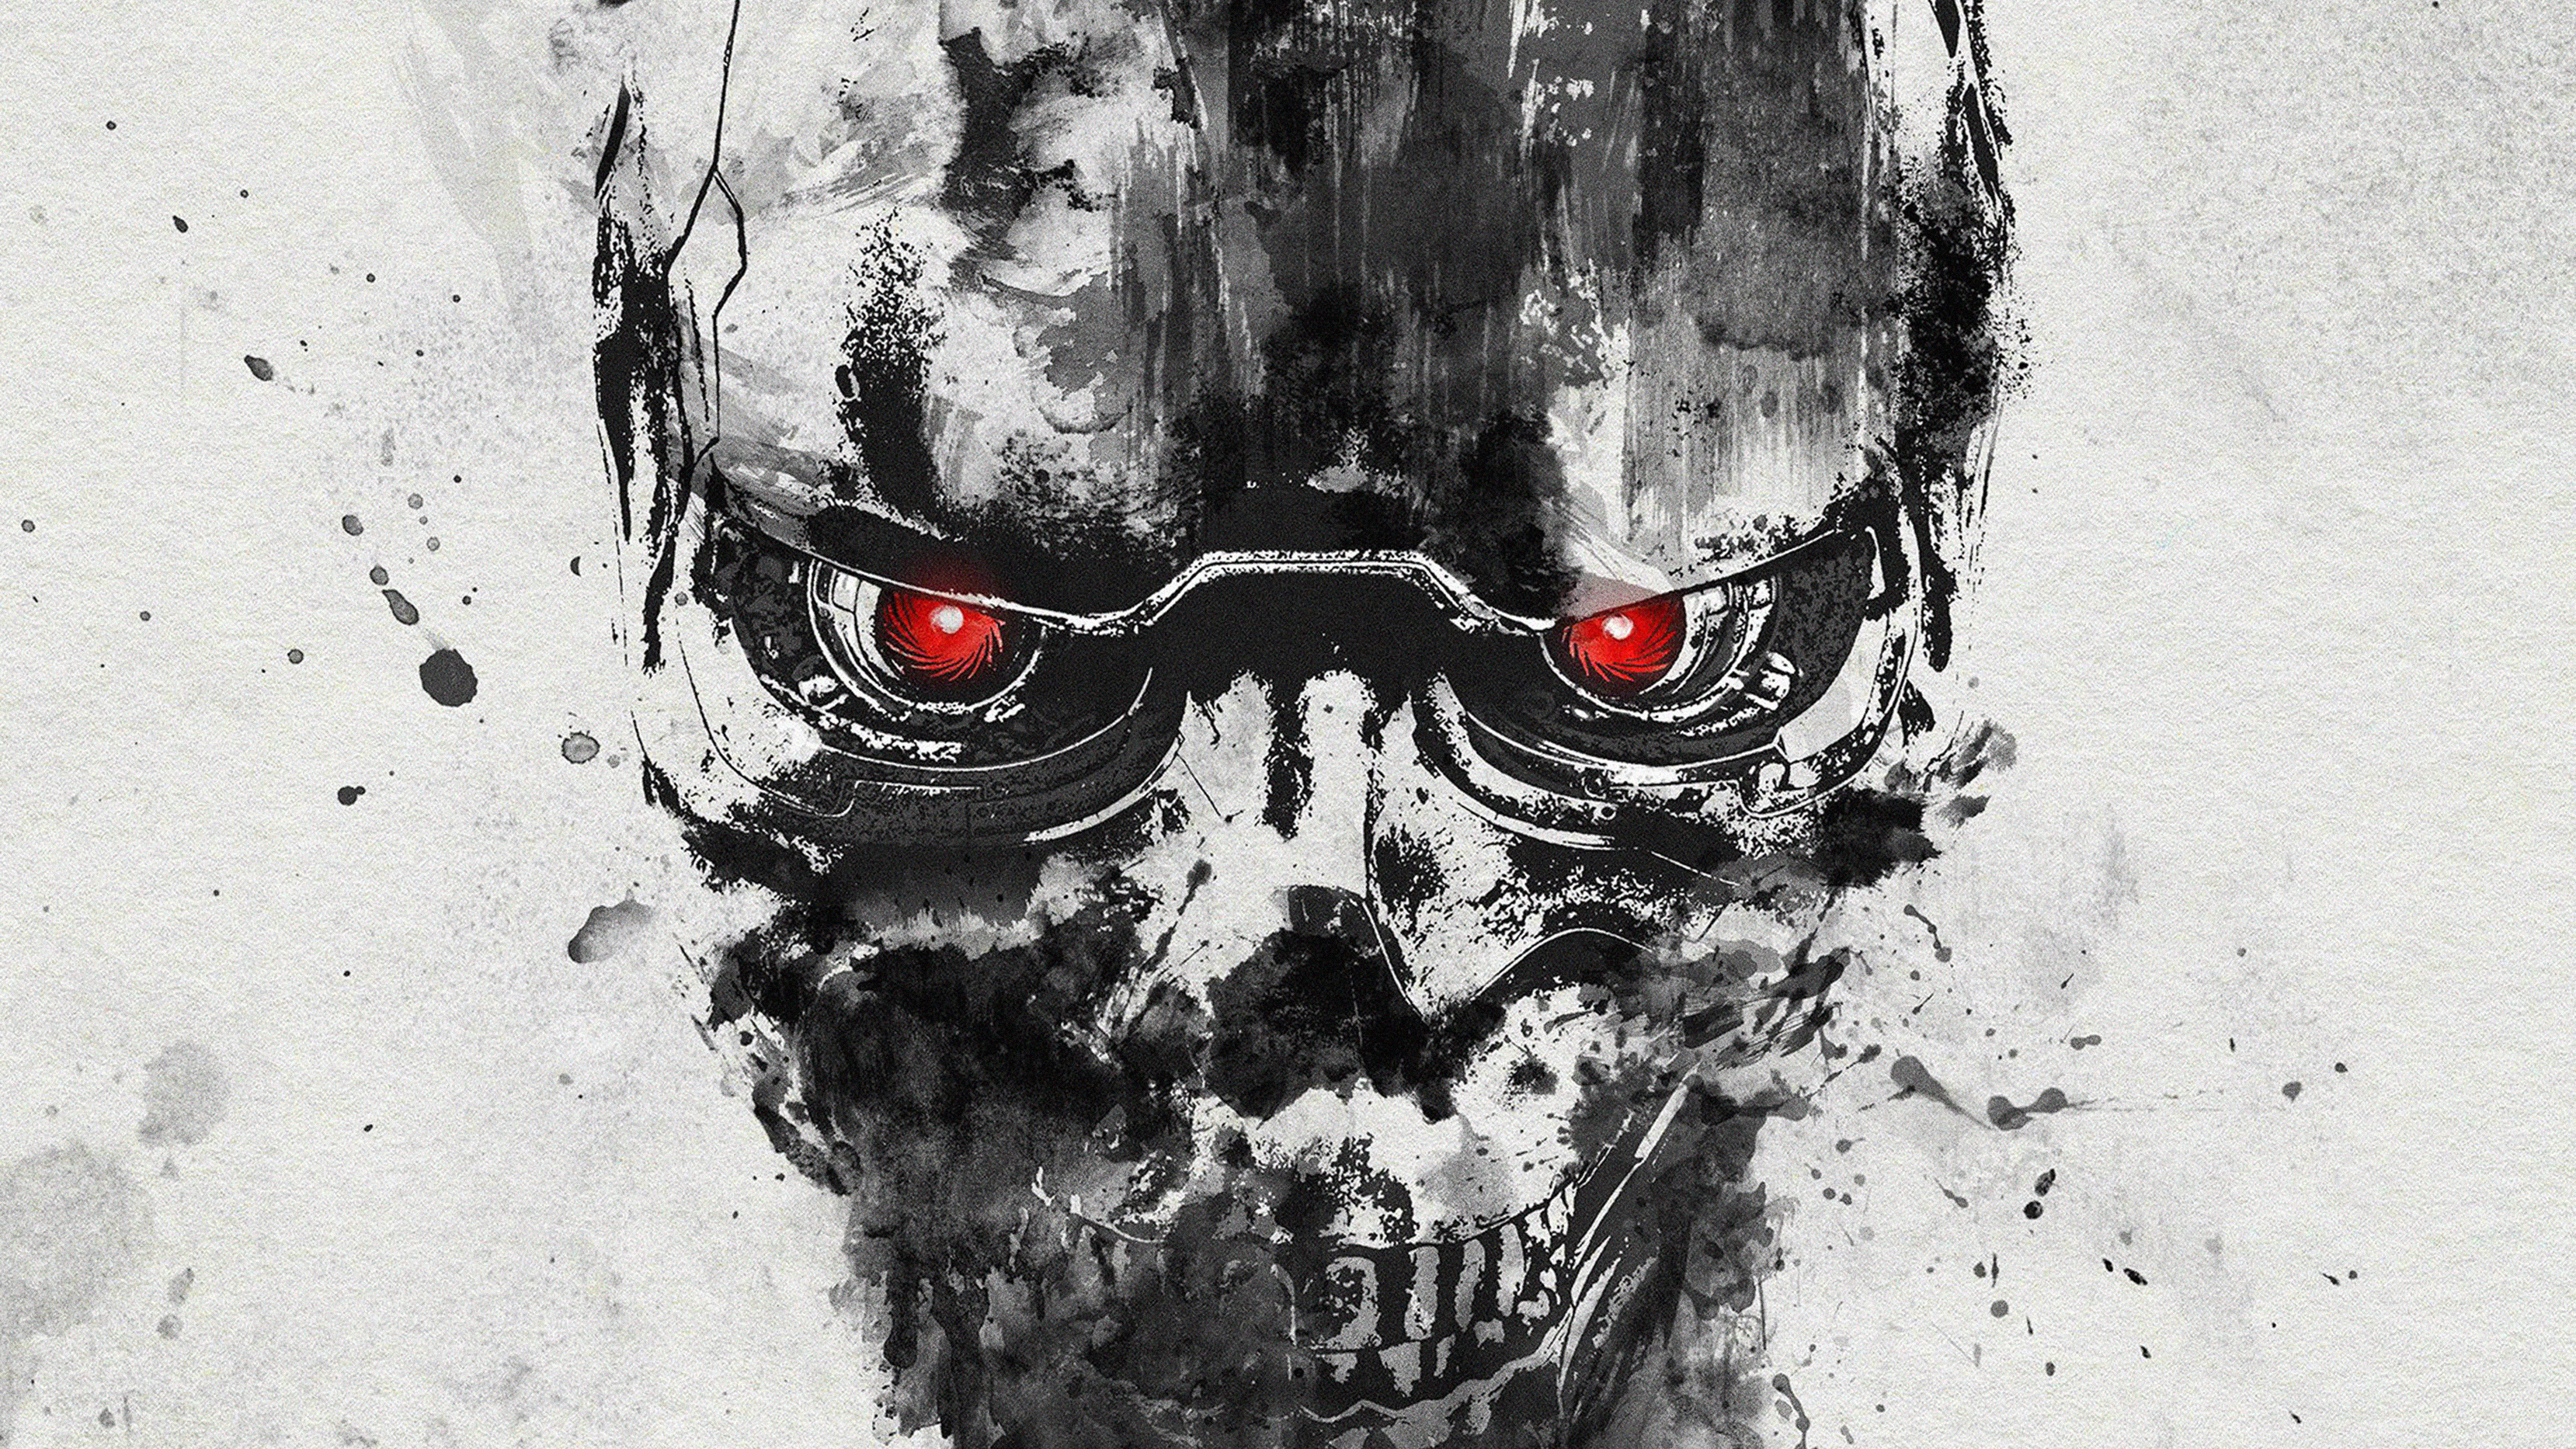 New Terminator Dark Fate Poster Wallpapers